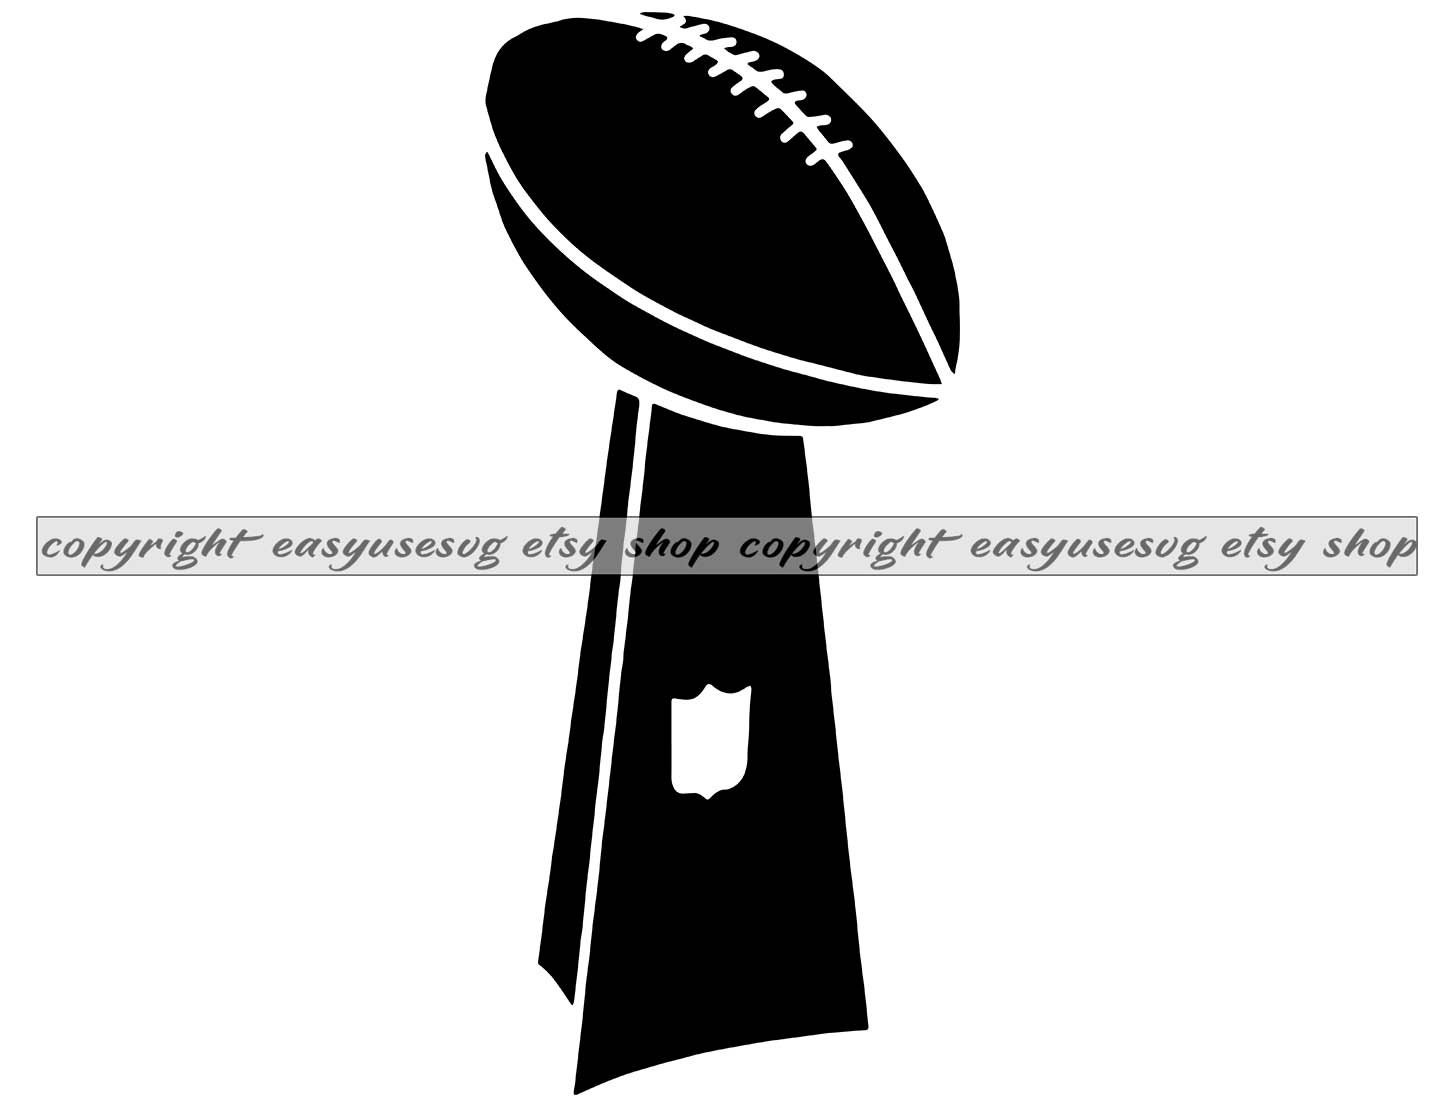 Super Bowl LVI SVG  Super Bowl Logo PNG